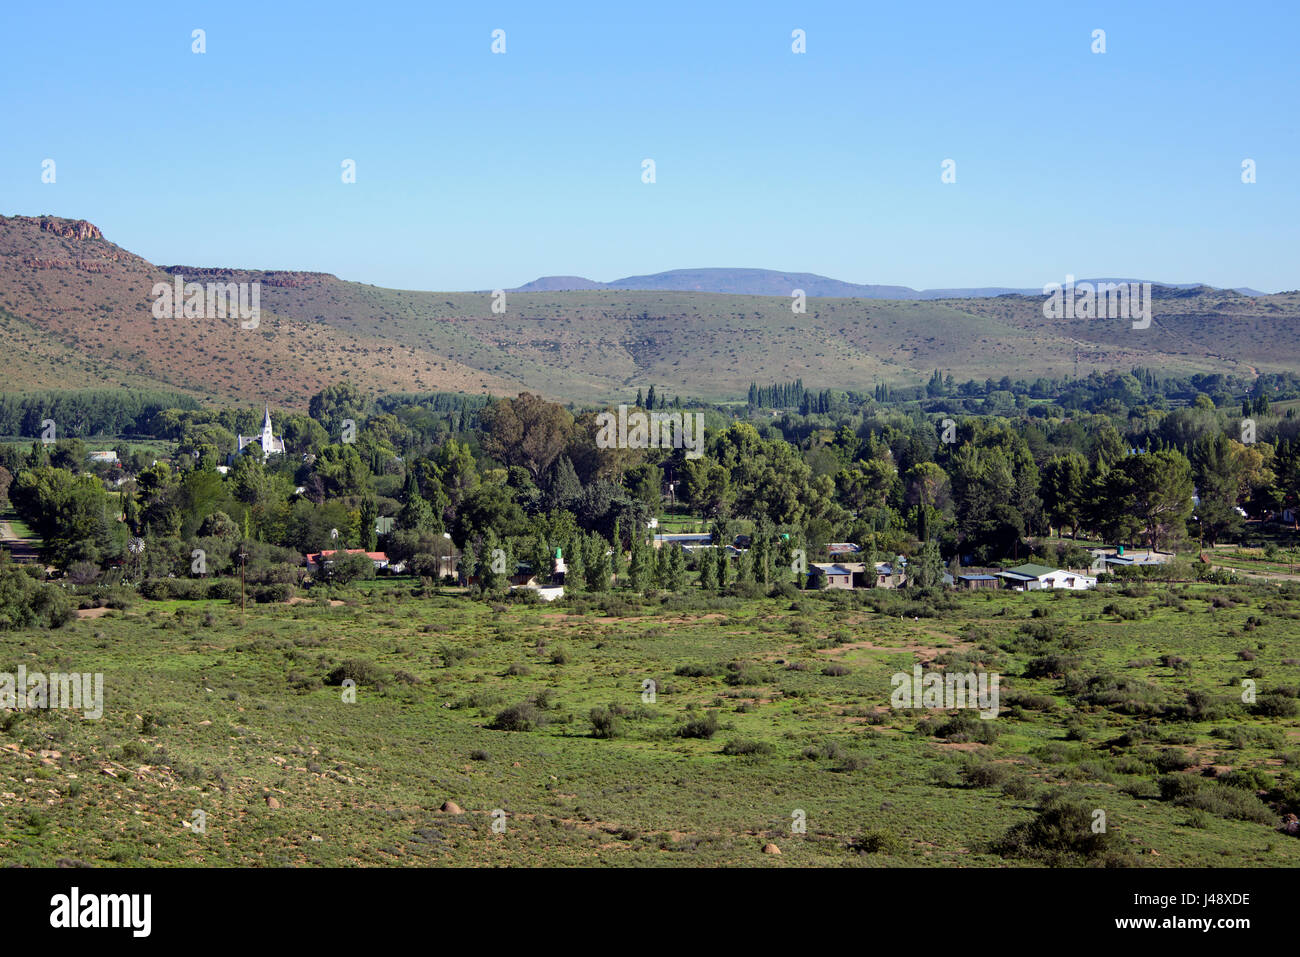 Vista panoramica Nieu Bethesda Karoo del Capo orientale del Sud Africa Foto Stock